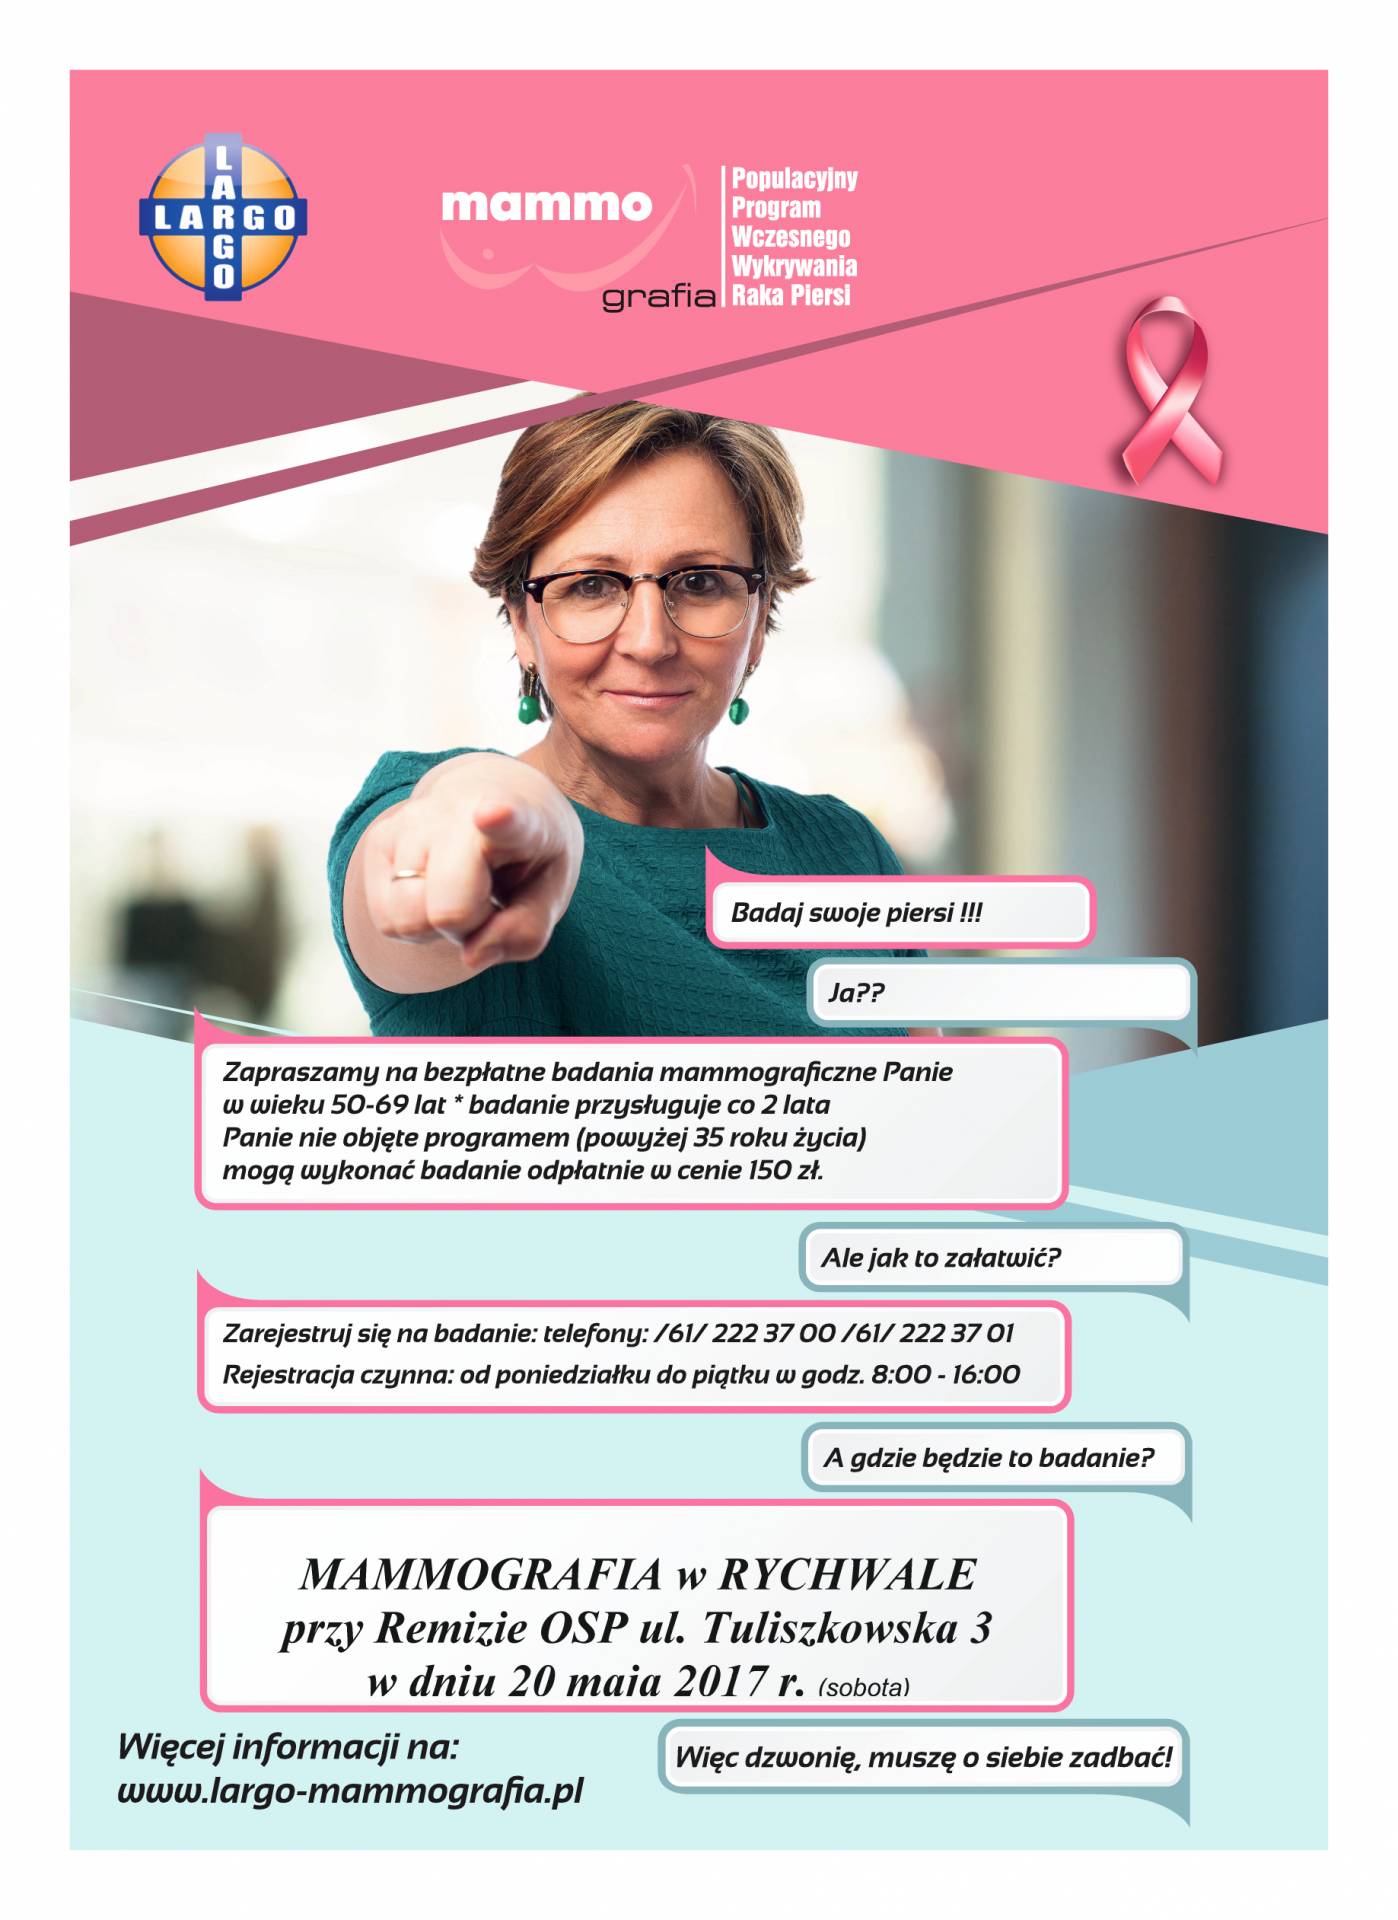 Badania Mammografia - 20 maja 2017 r._1